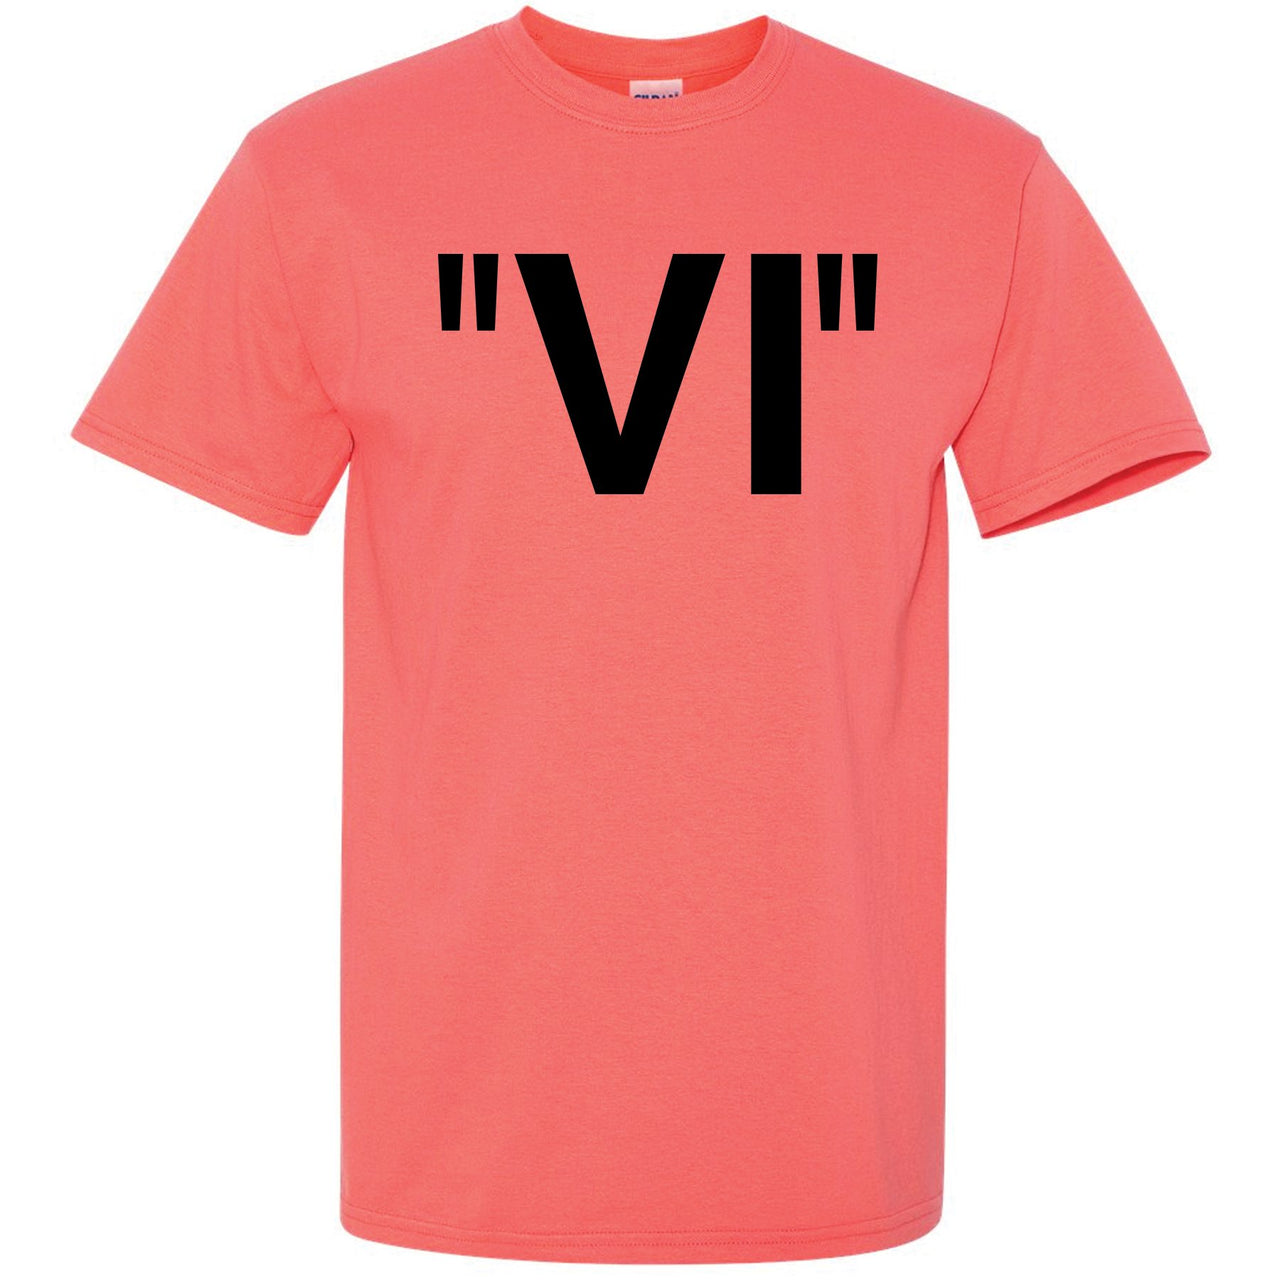 Infrared 6s T Shirt | VI, Infrared